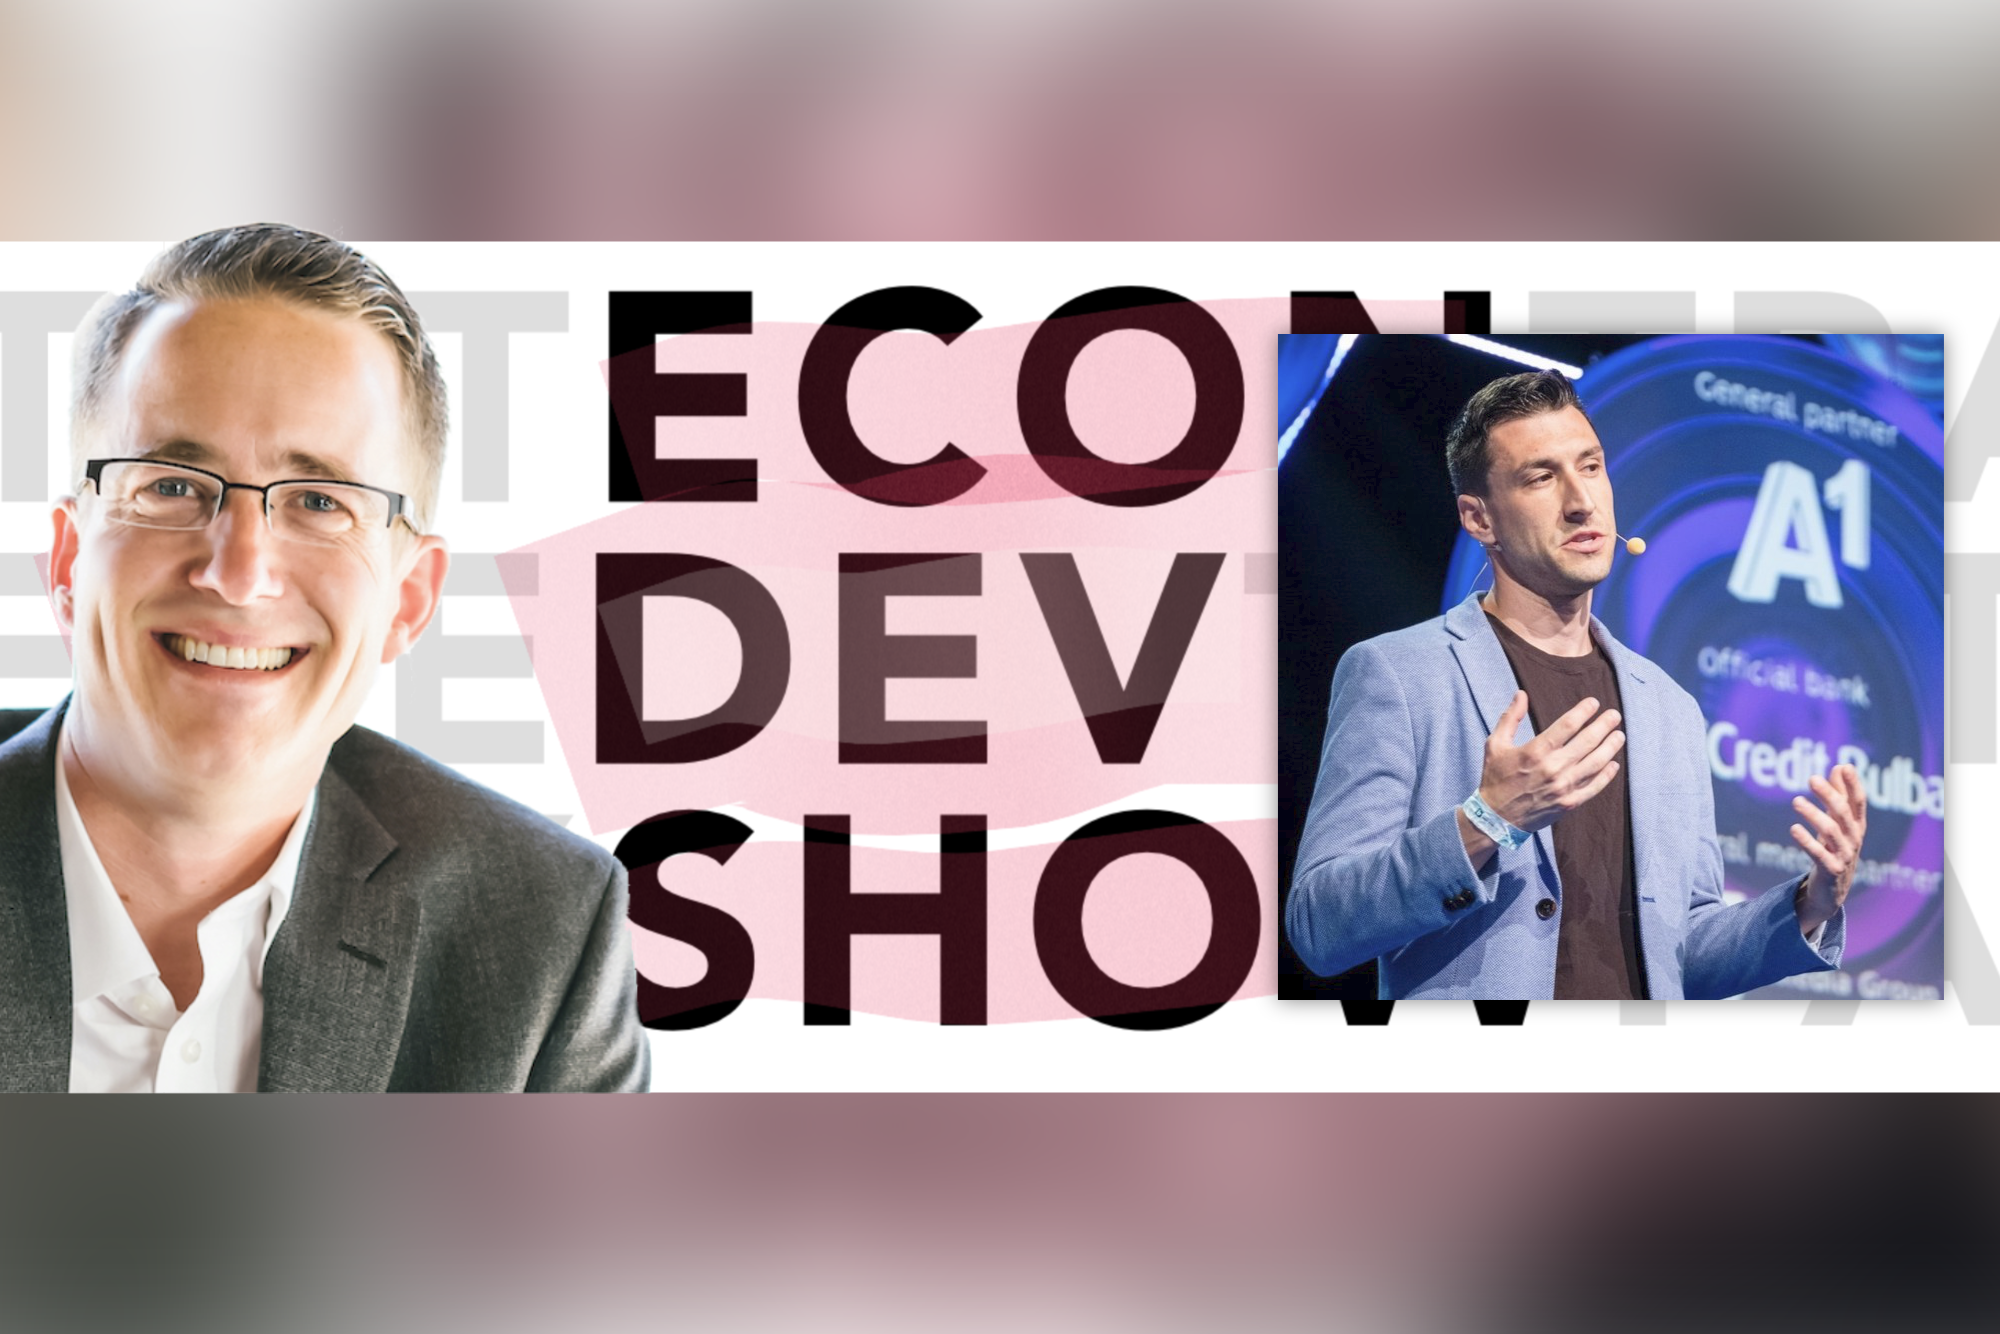 Podcast Episode 49 - Understanding Your Startup Ecosystem With Darren Stauffer